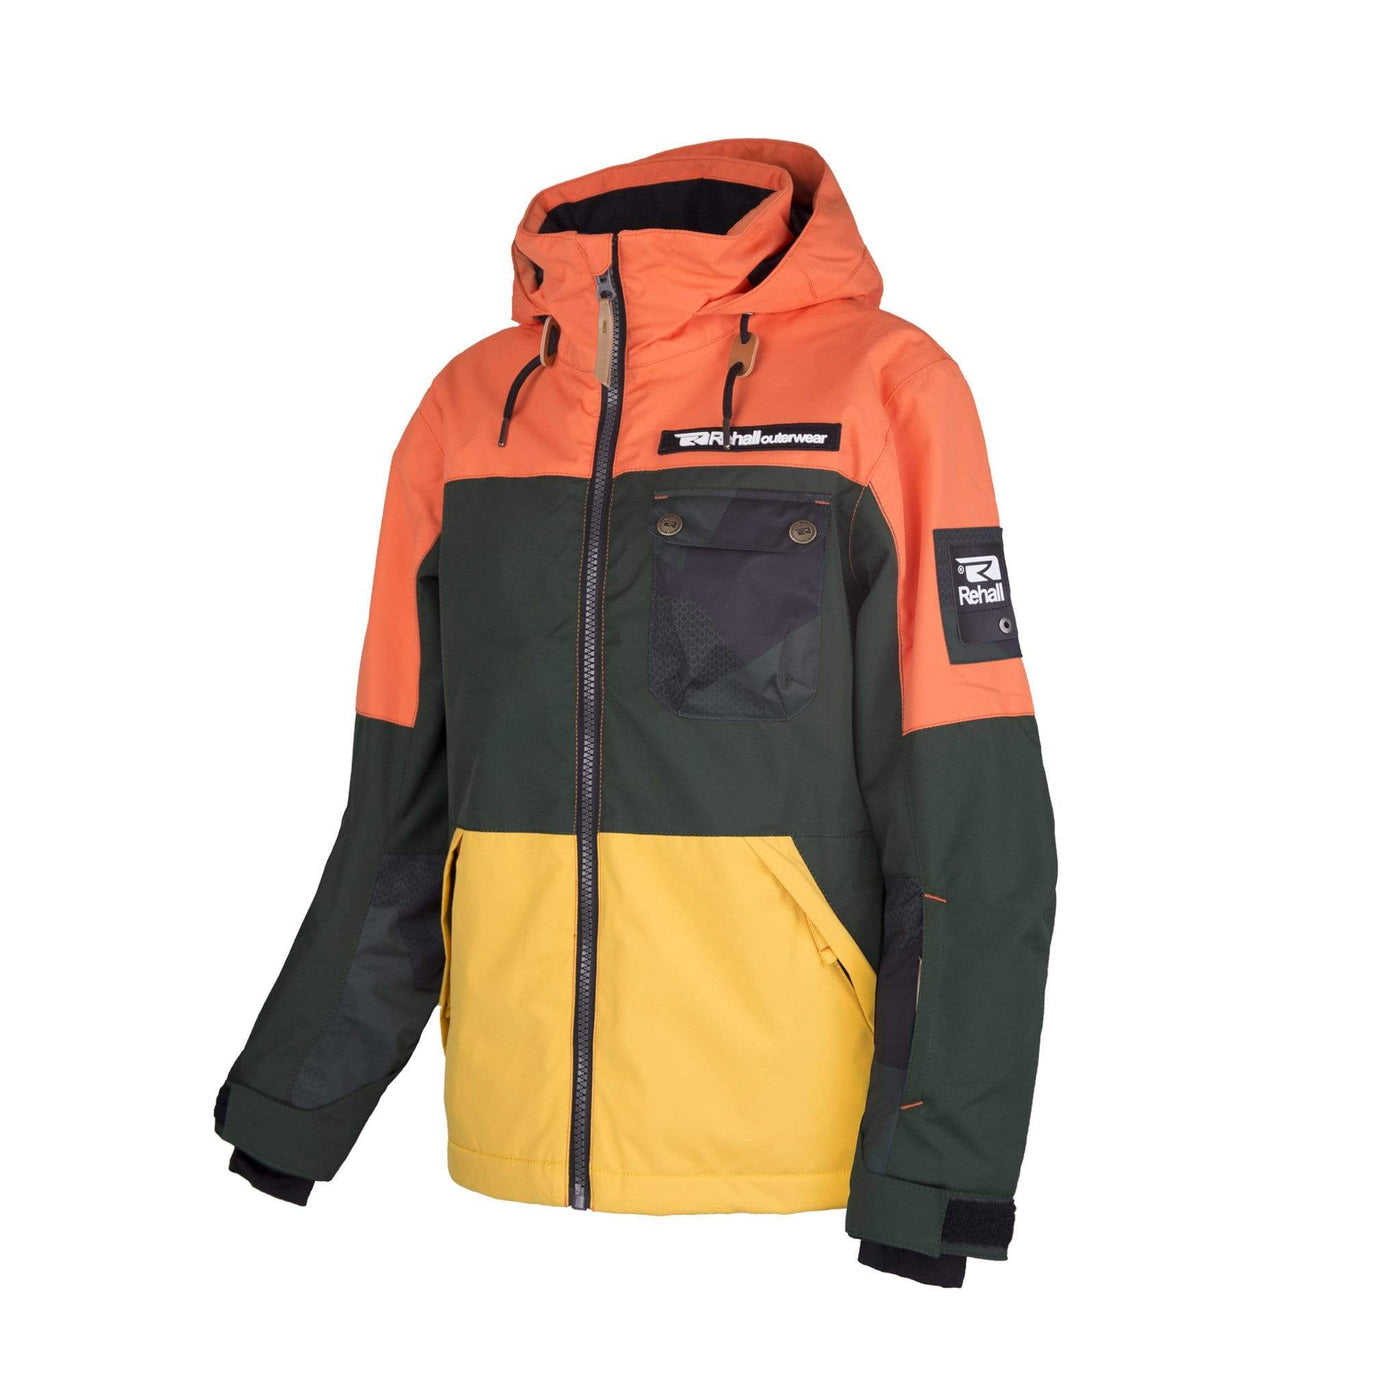 SnowKids Outerwear Jacket 116 Rehall Vaill Jr Boys Snow Jacket - Orange